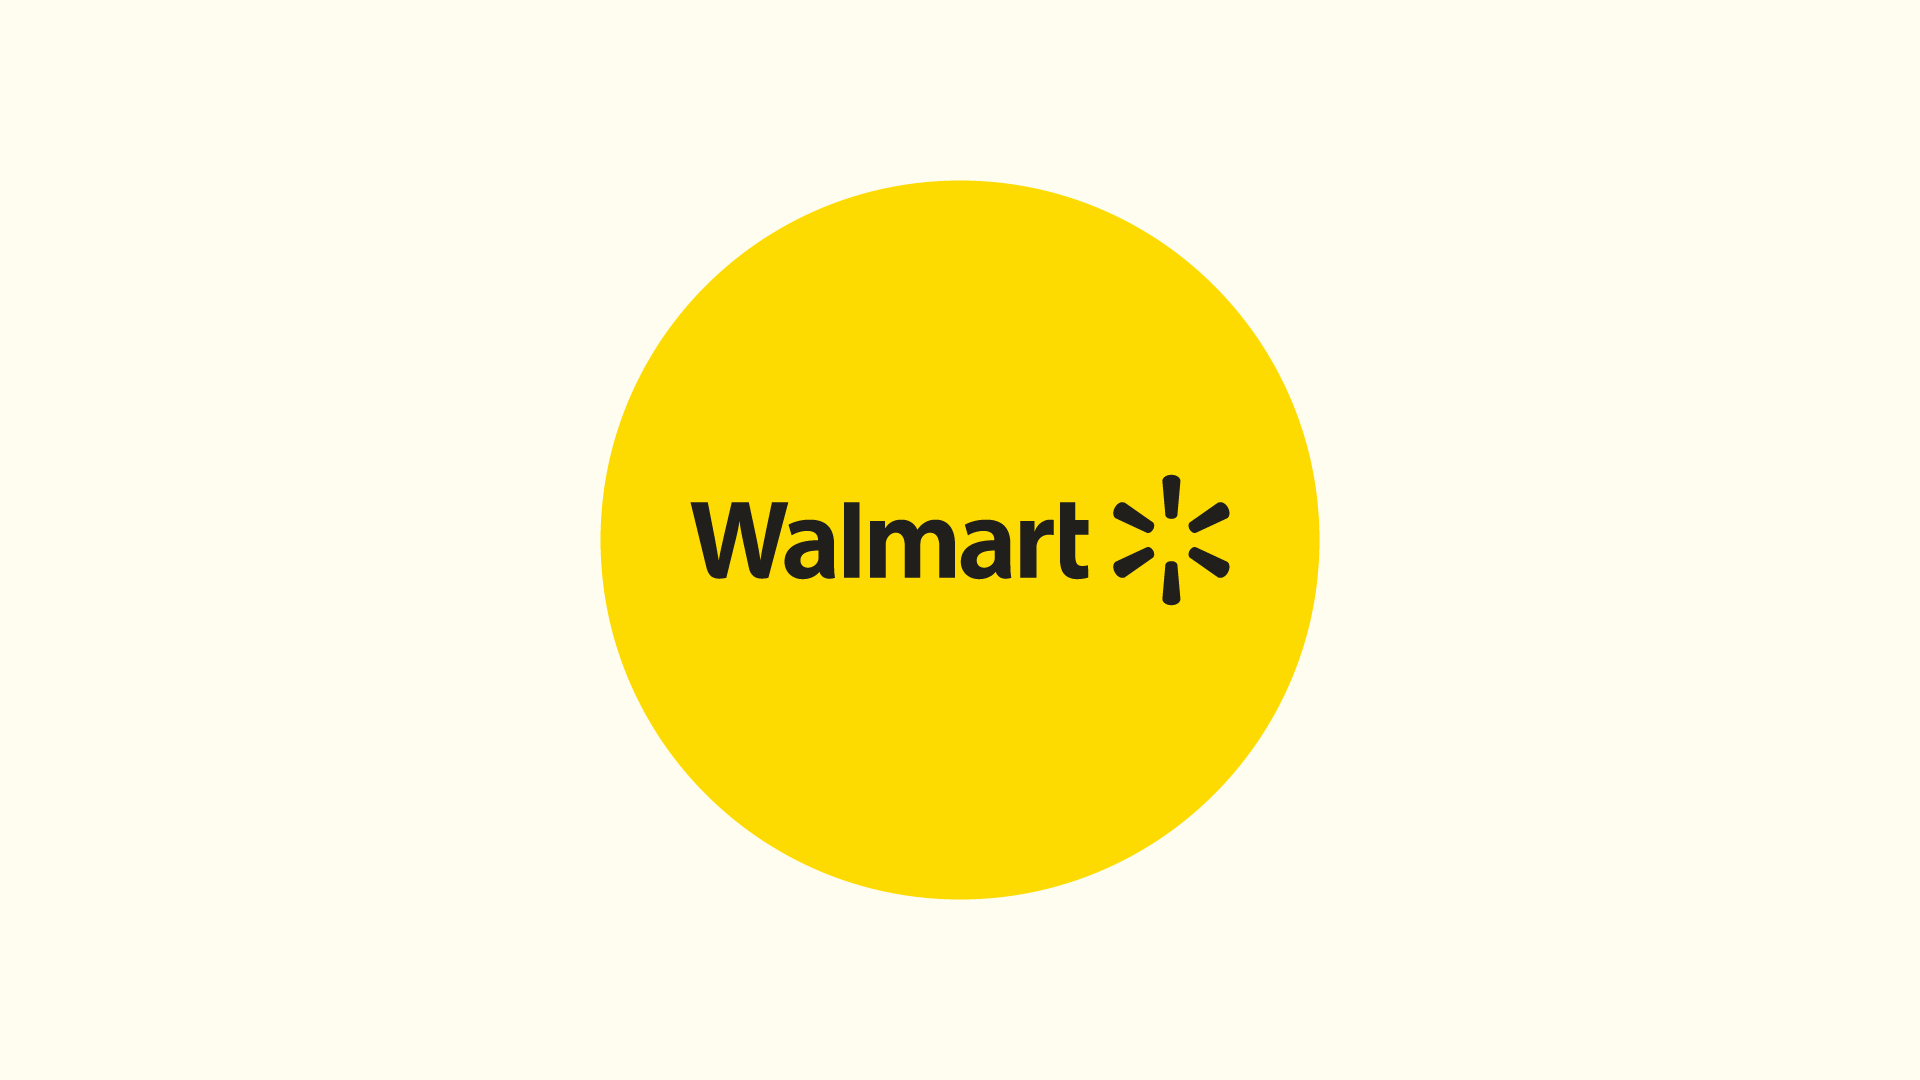 walmart logo transparent